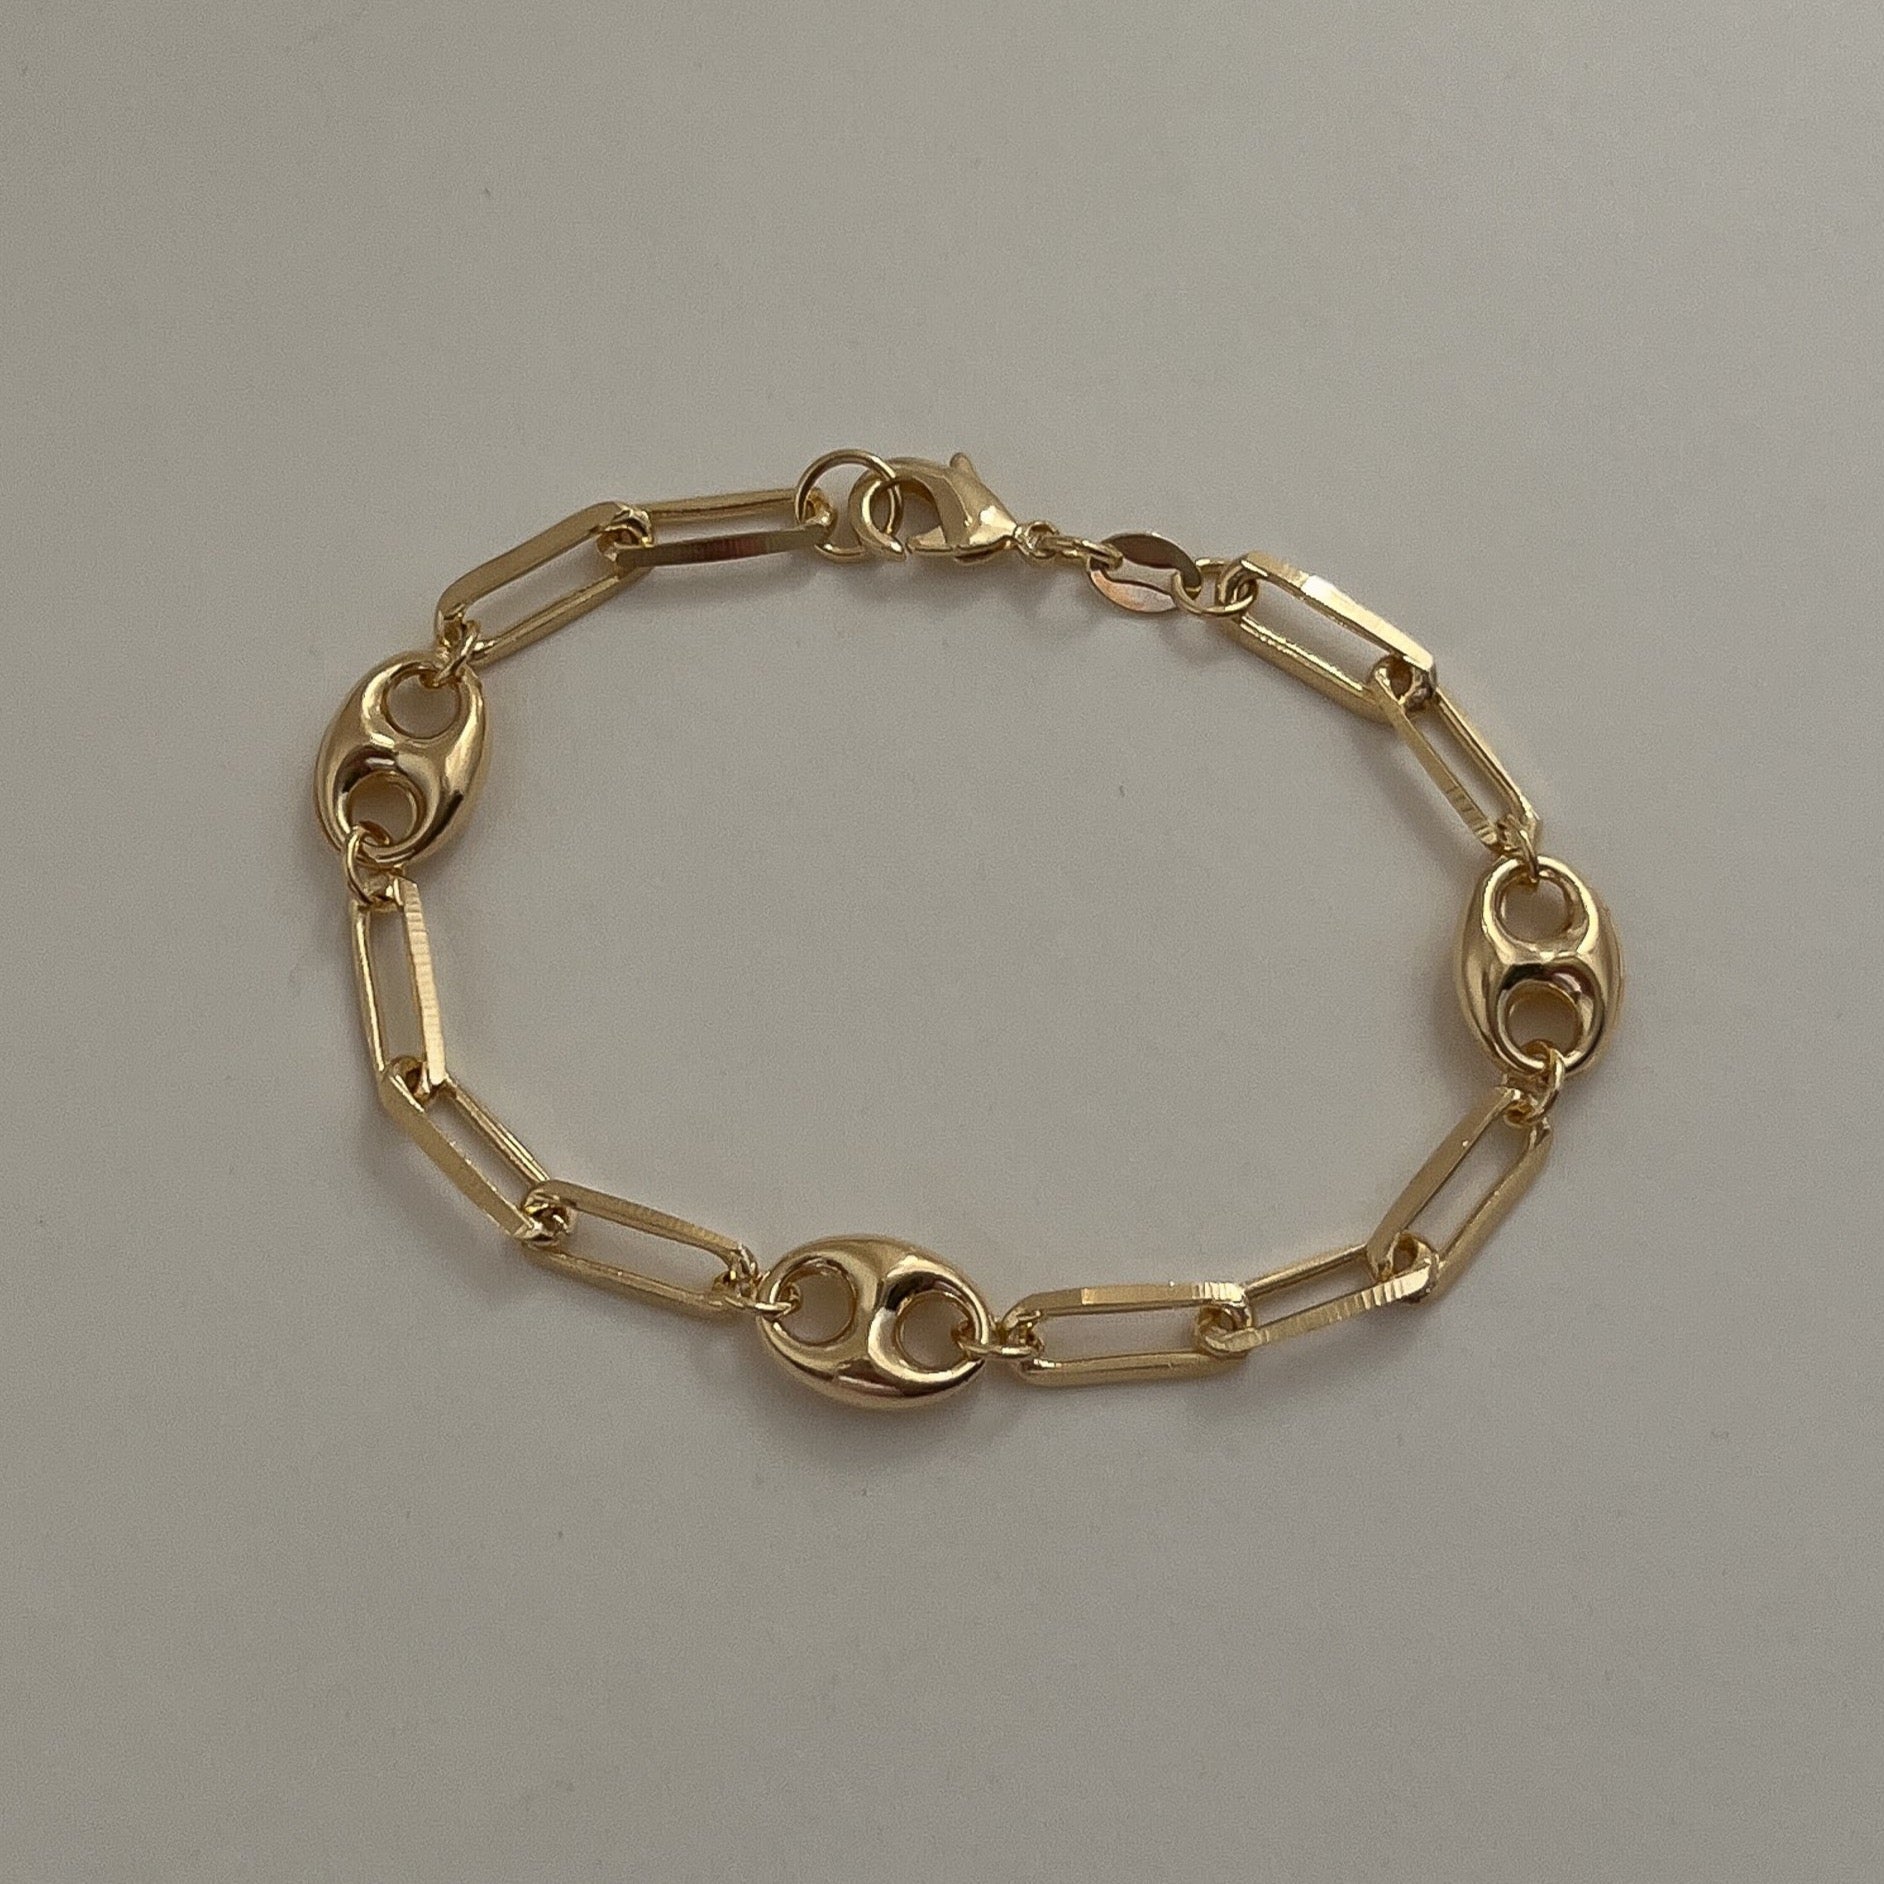 18k Gold Filled trendy mariner link bracelet set into a paperclip link chain